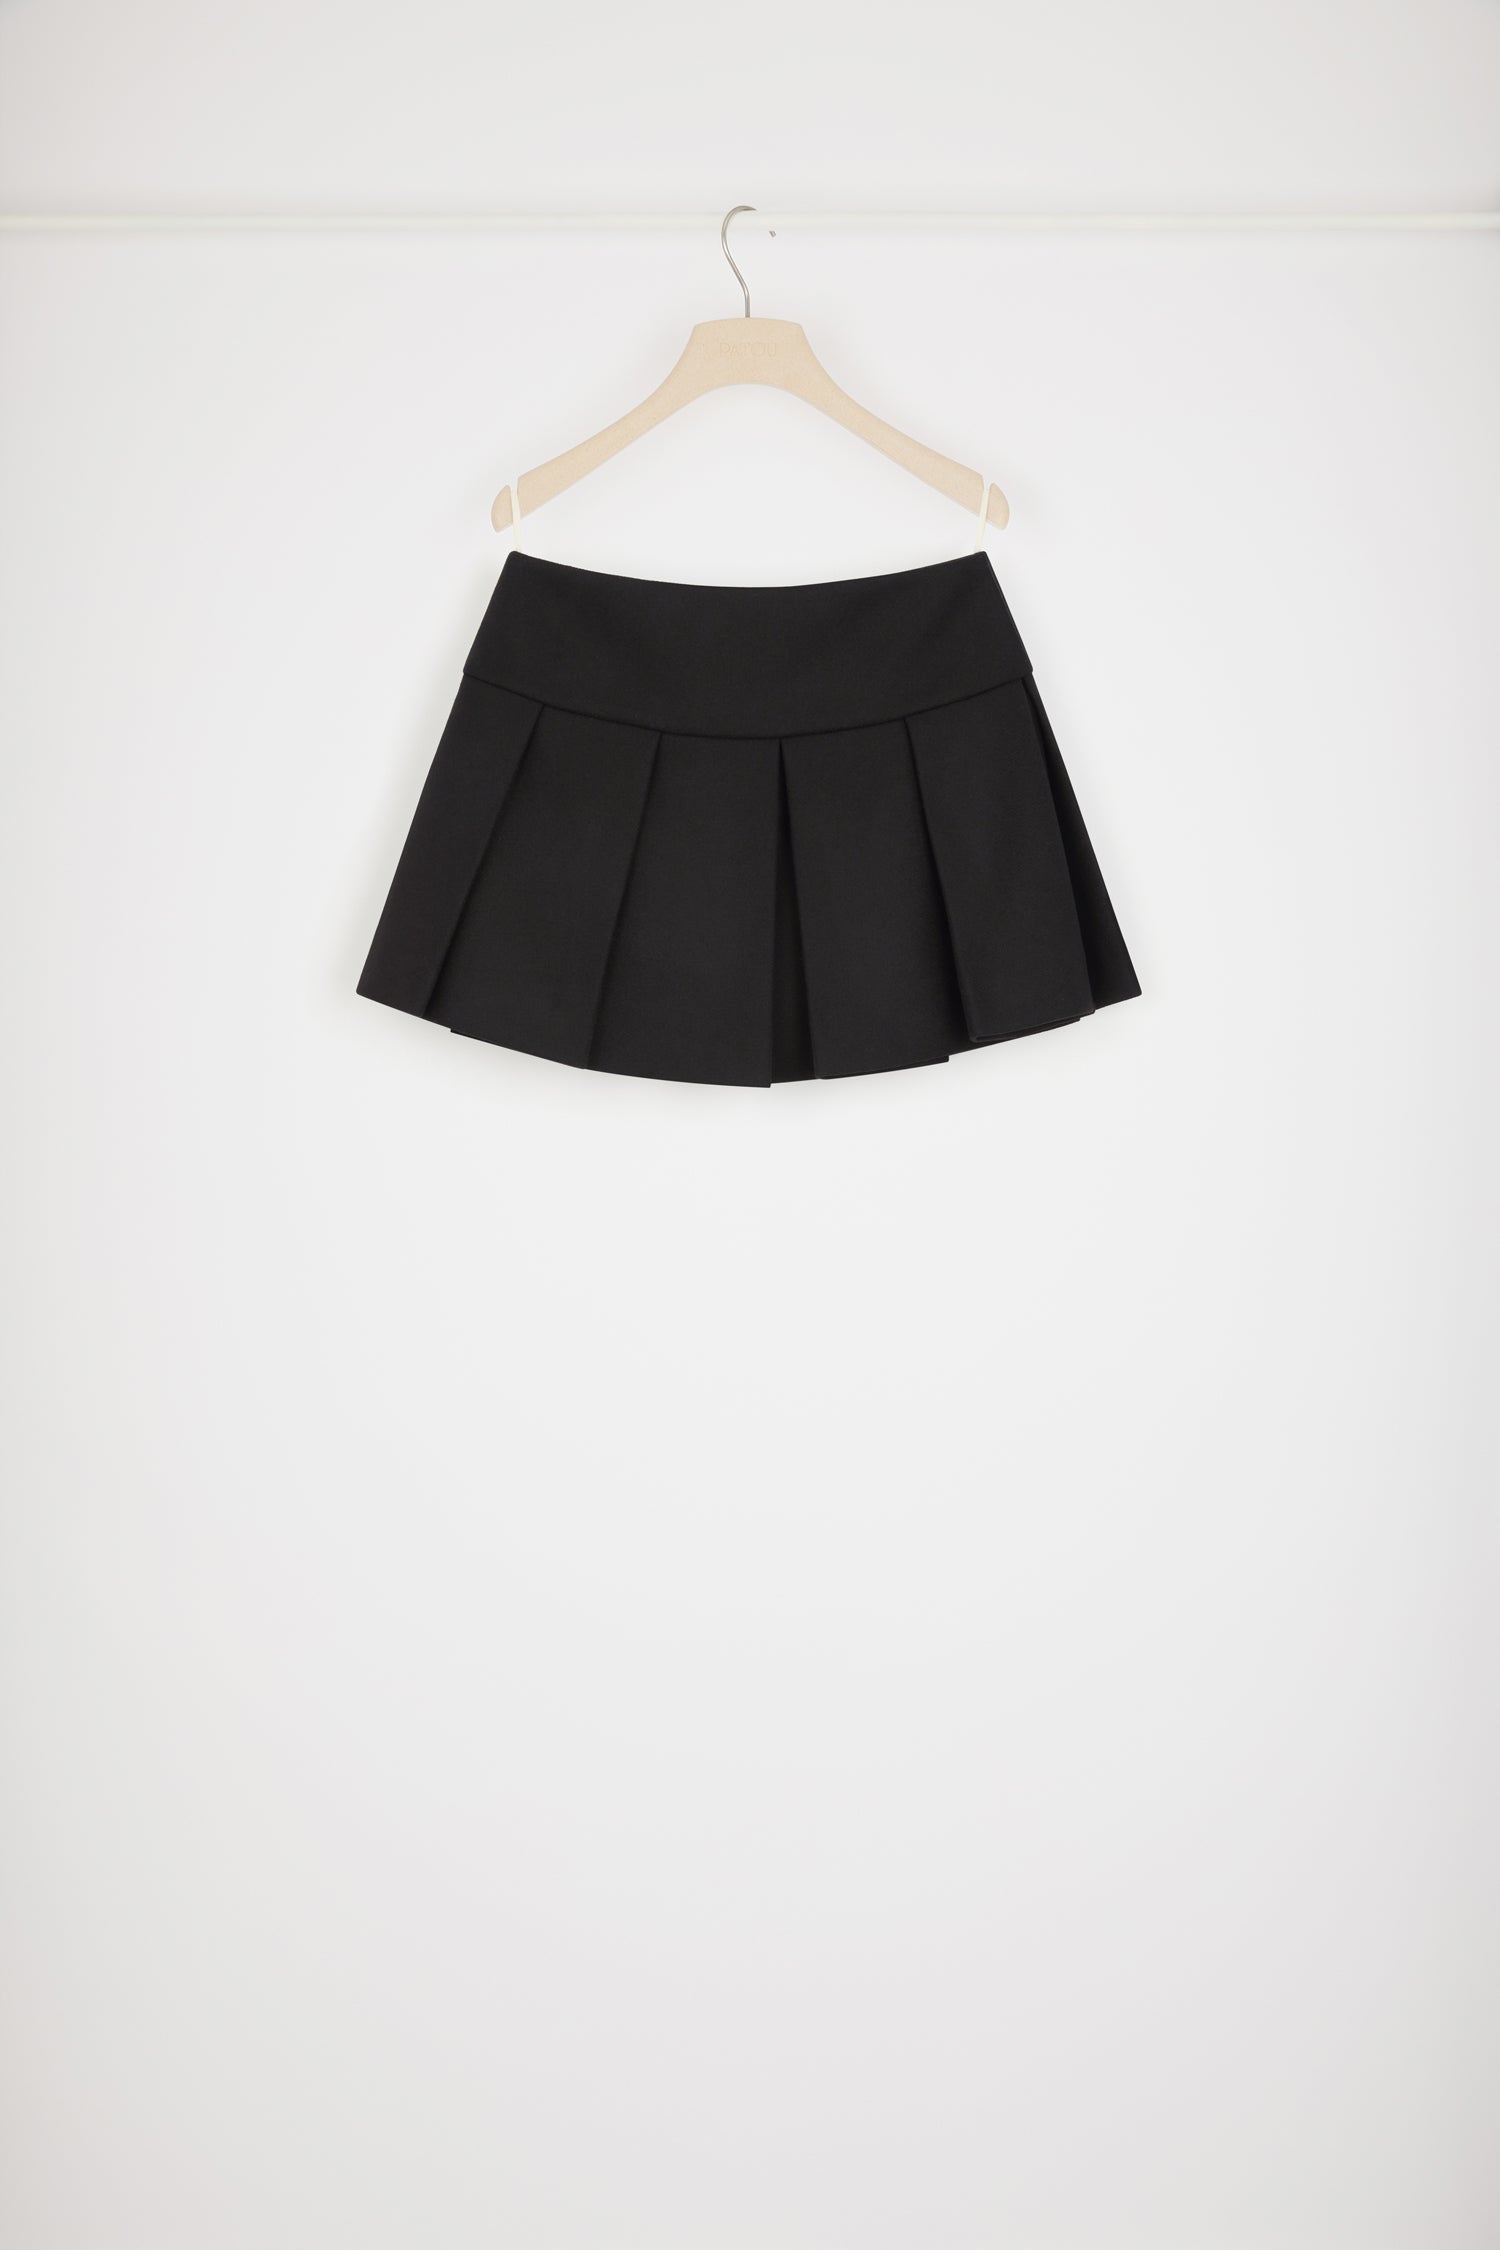 Patou | Pleated mini skirt in wool-blend felt